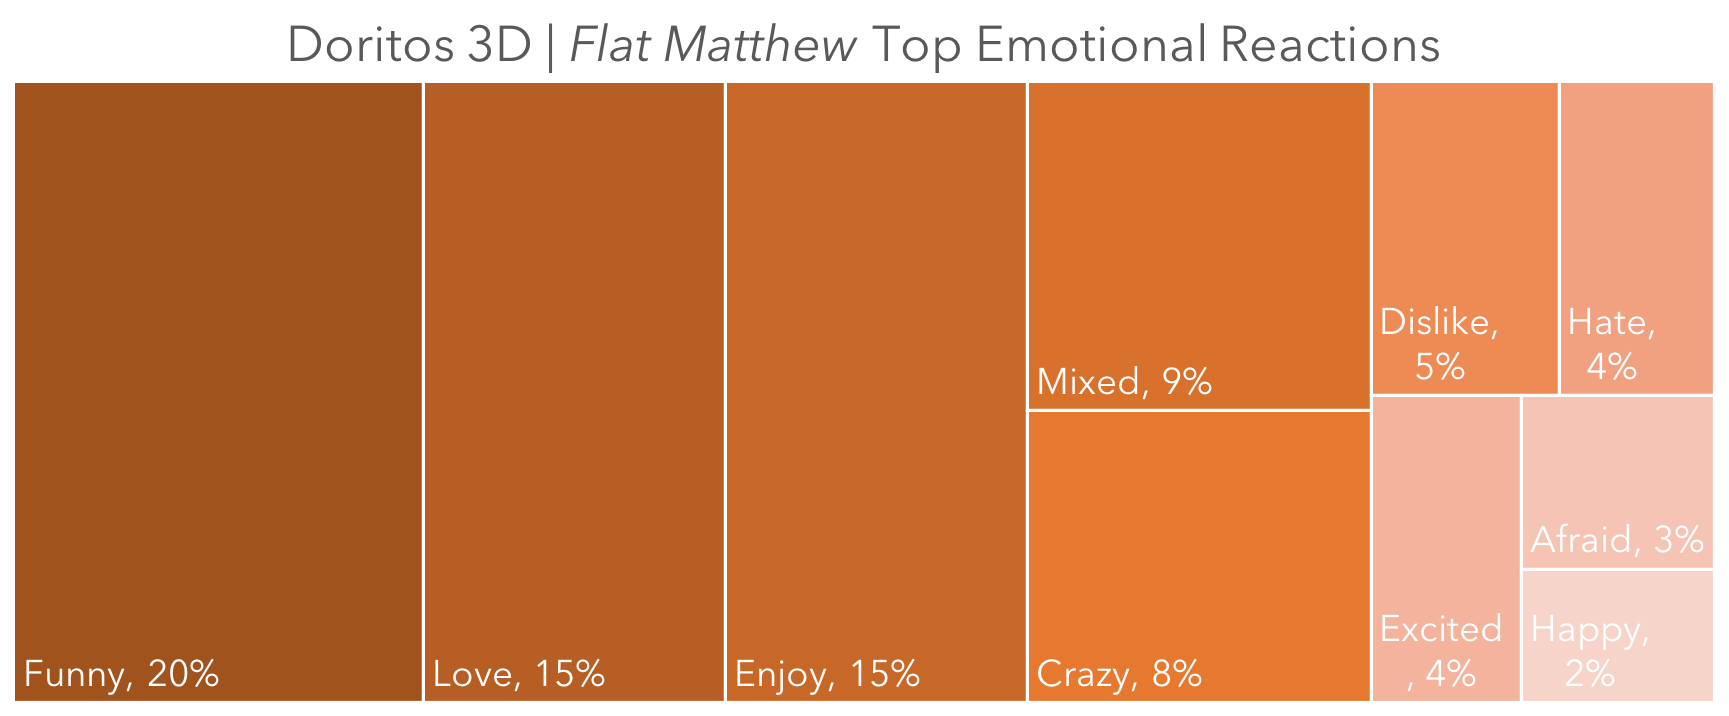 Source: Top Emotional Reactions, Doritos 3D Flat Matthew on YouTube